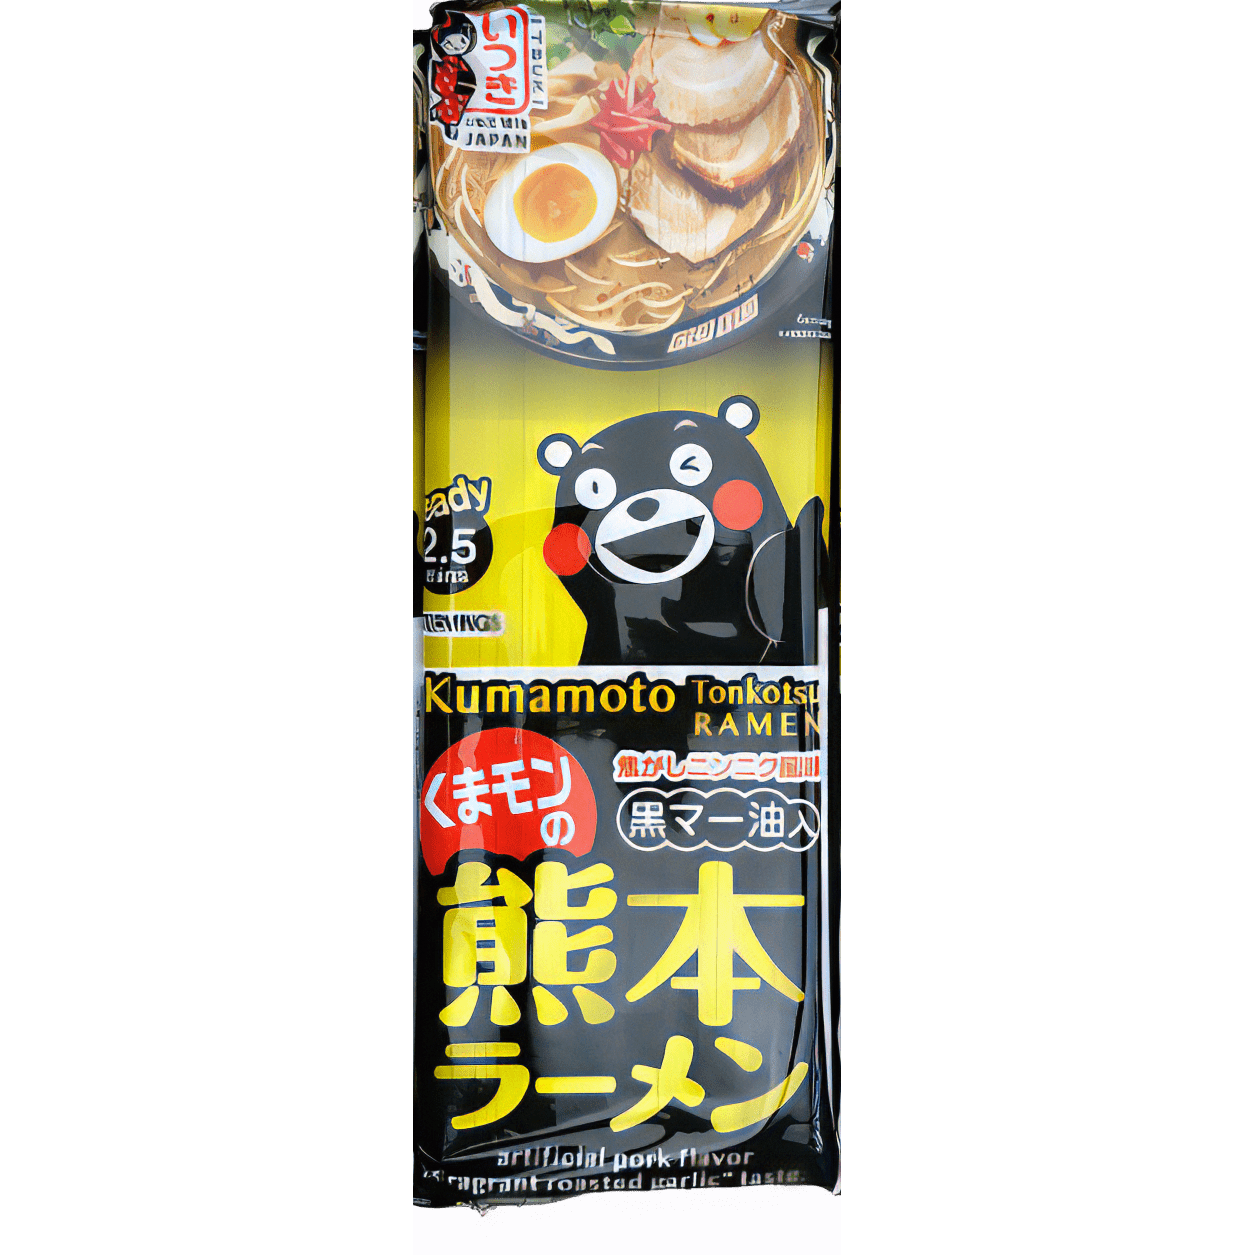 Itsuki Kumamon Kumamoto Tonkotsu Ramen 2 servings / 五木 くまモンの熊本ラーメン 2人前 - RiceWineShop